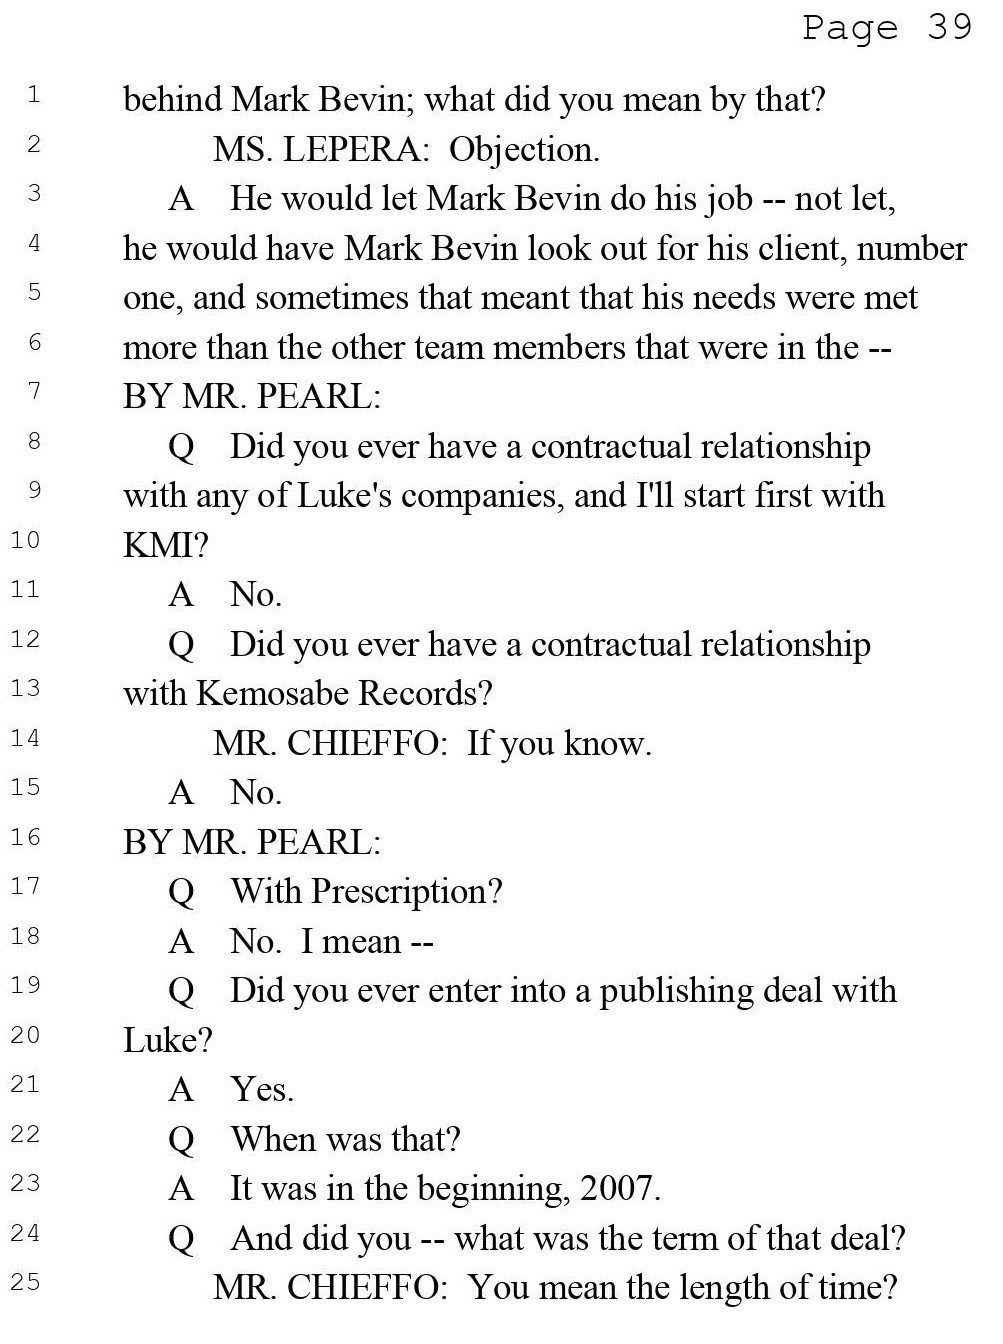 An excerpt of Katy Perry's 2017 deposition in the Luke vs. Kesha defamation lawsuit.